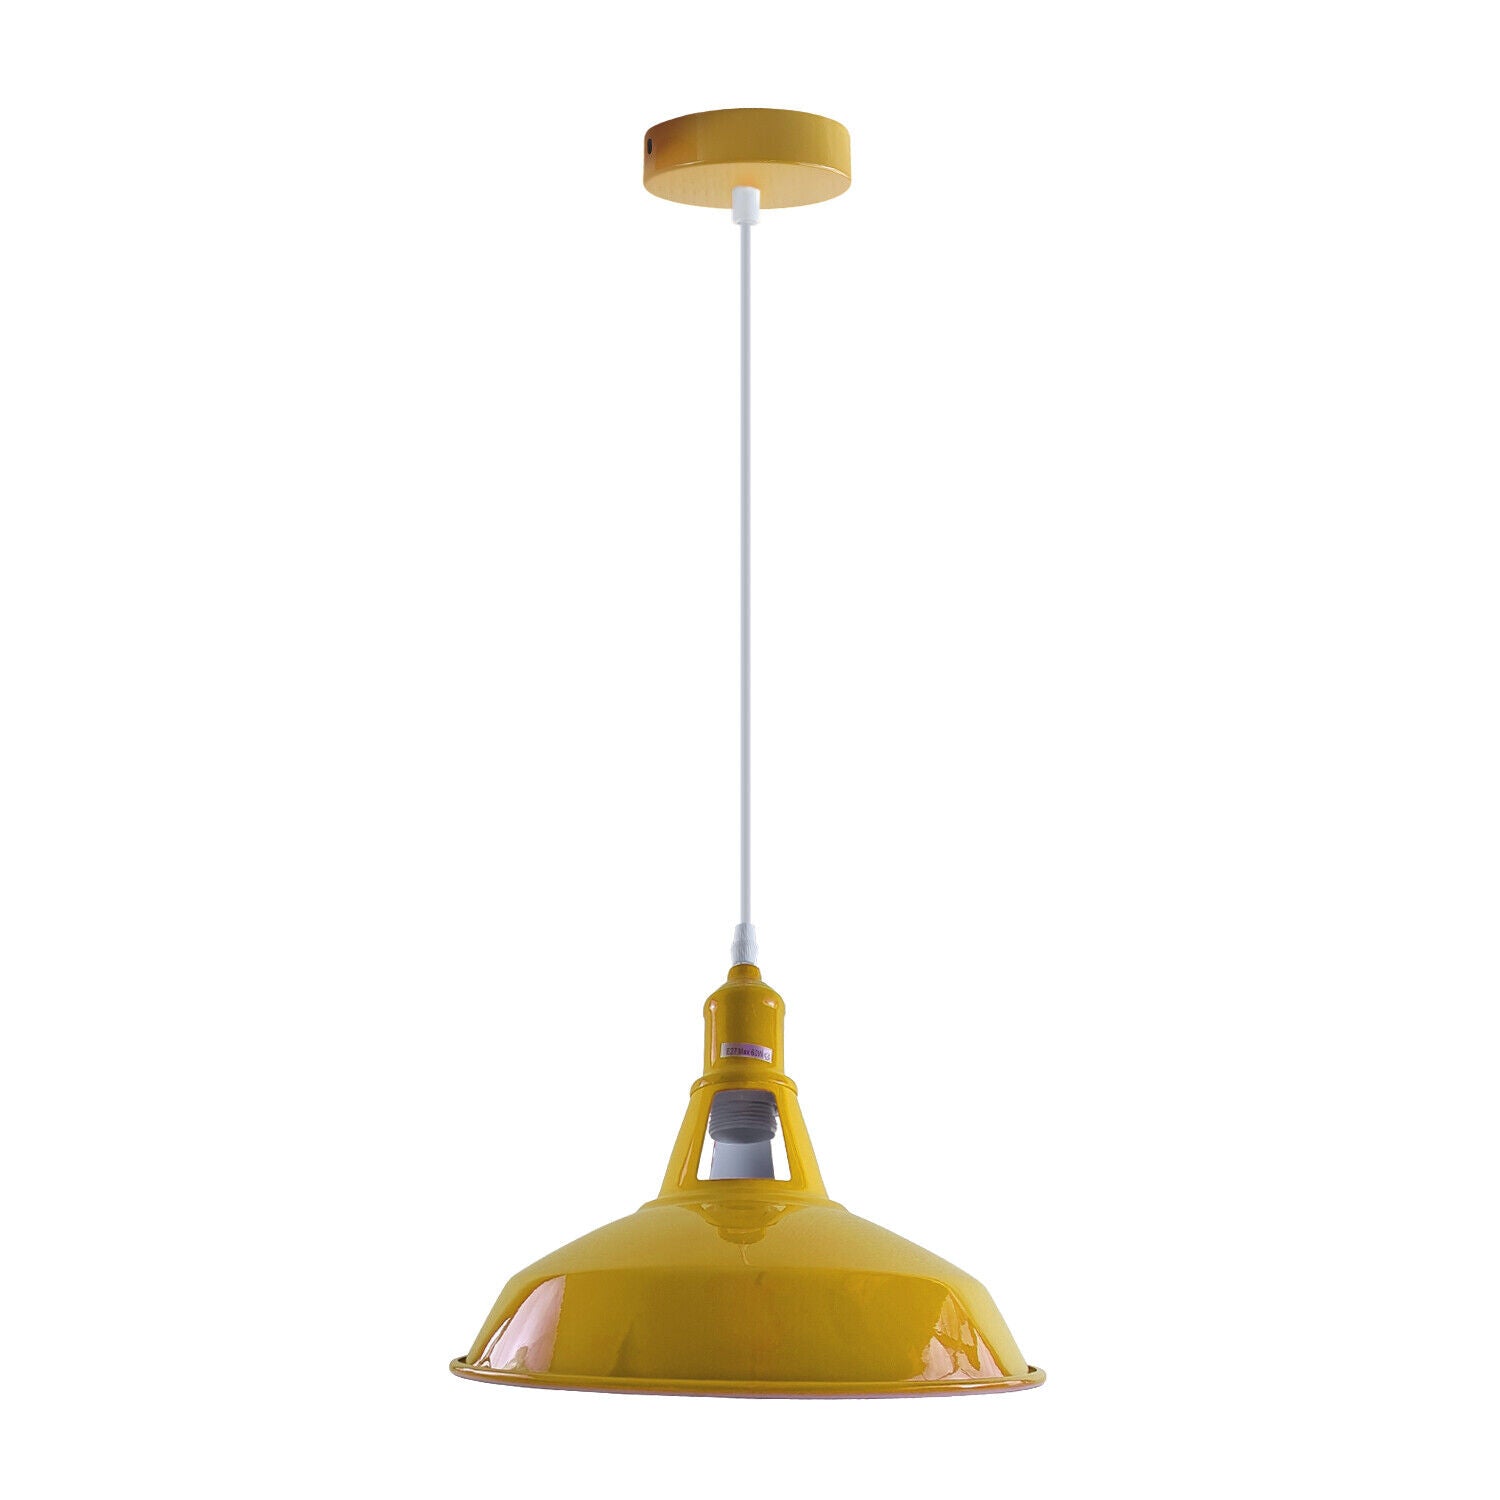 Vintage yellow pendant light fixture